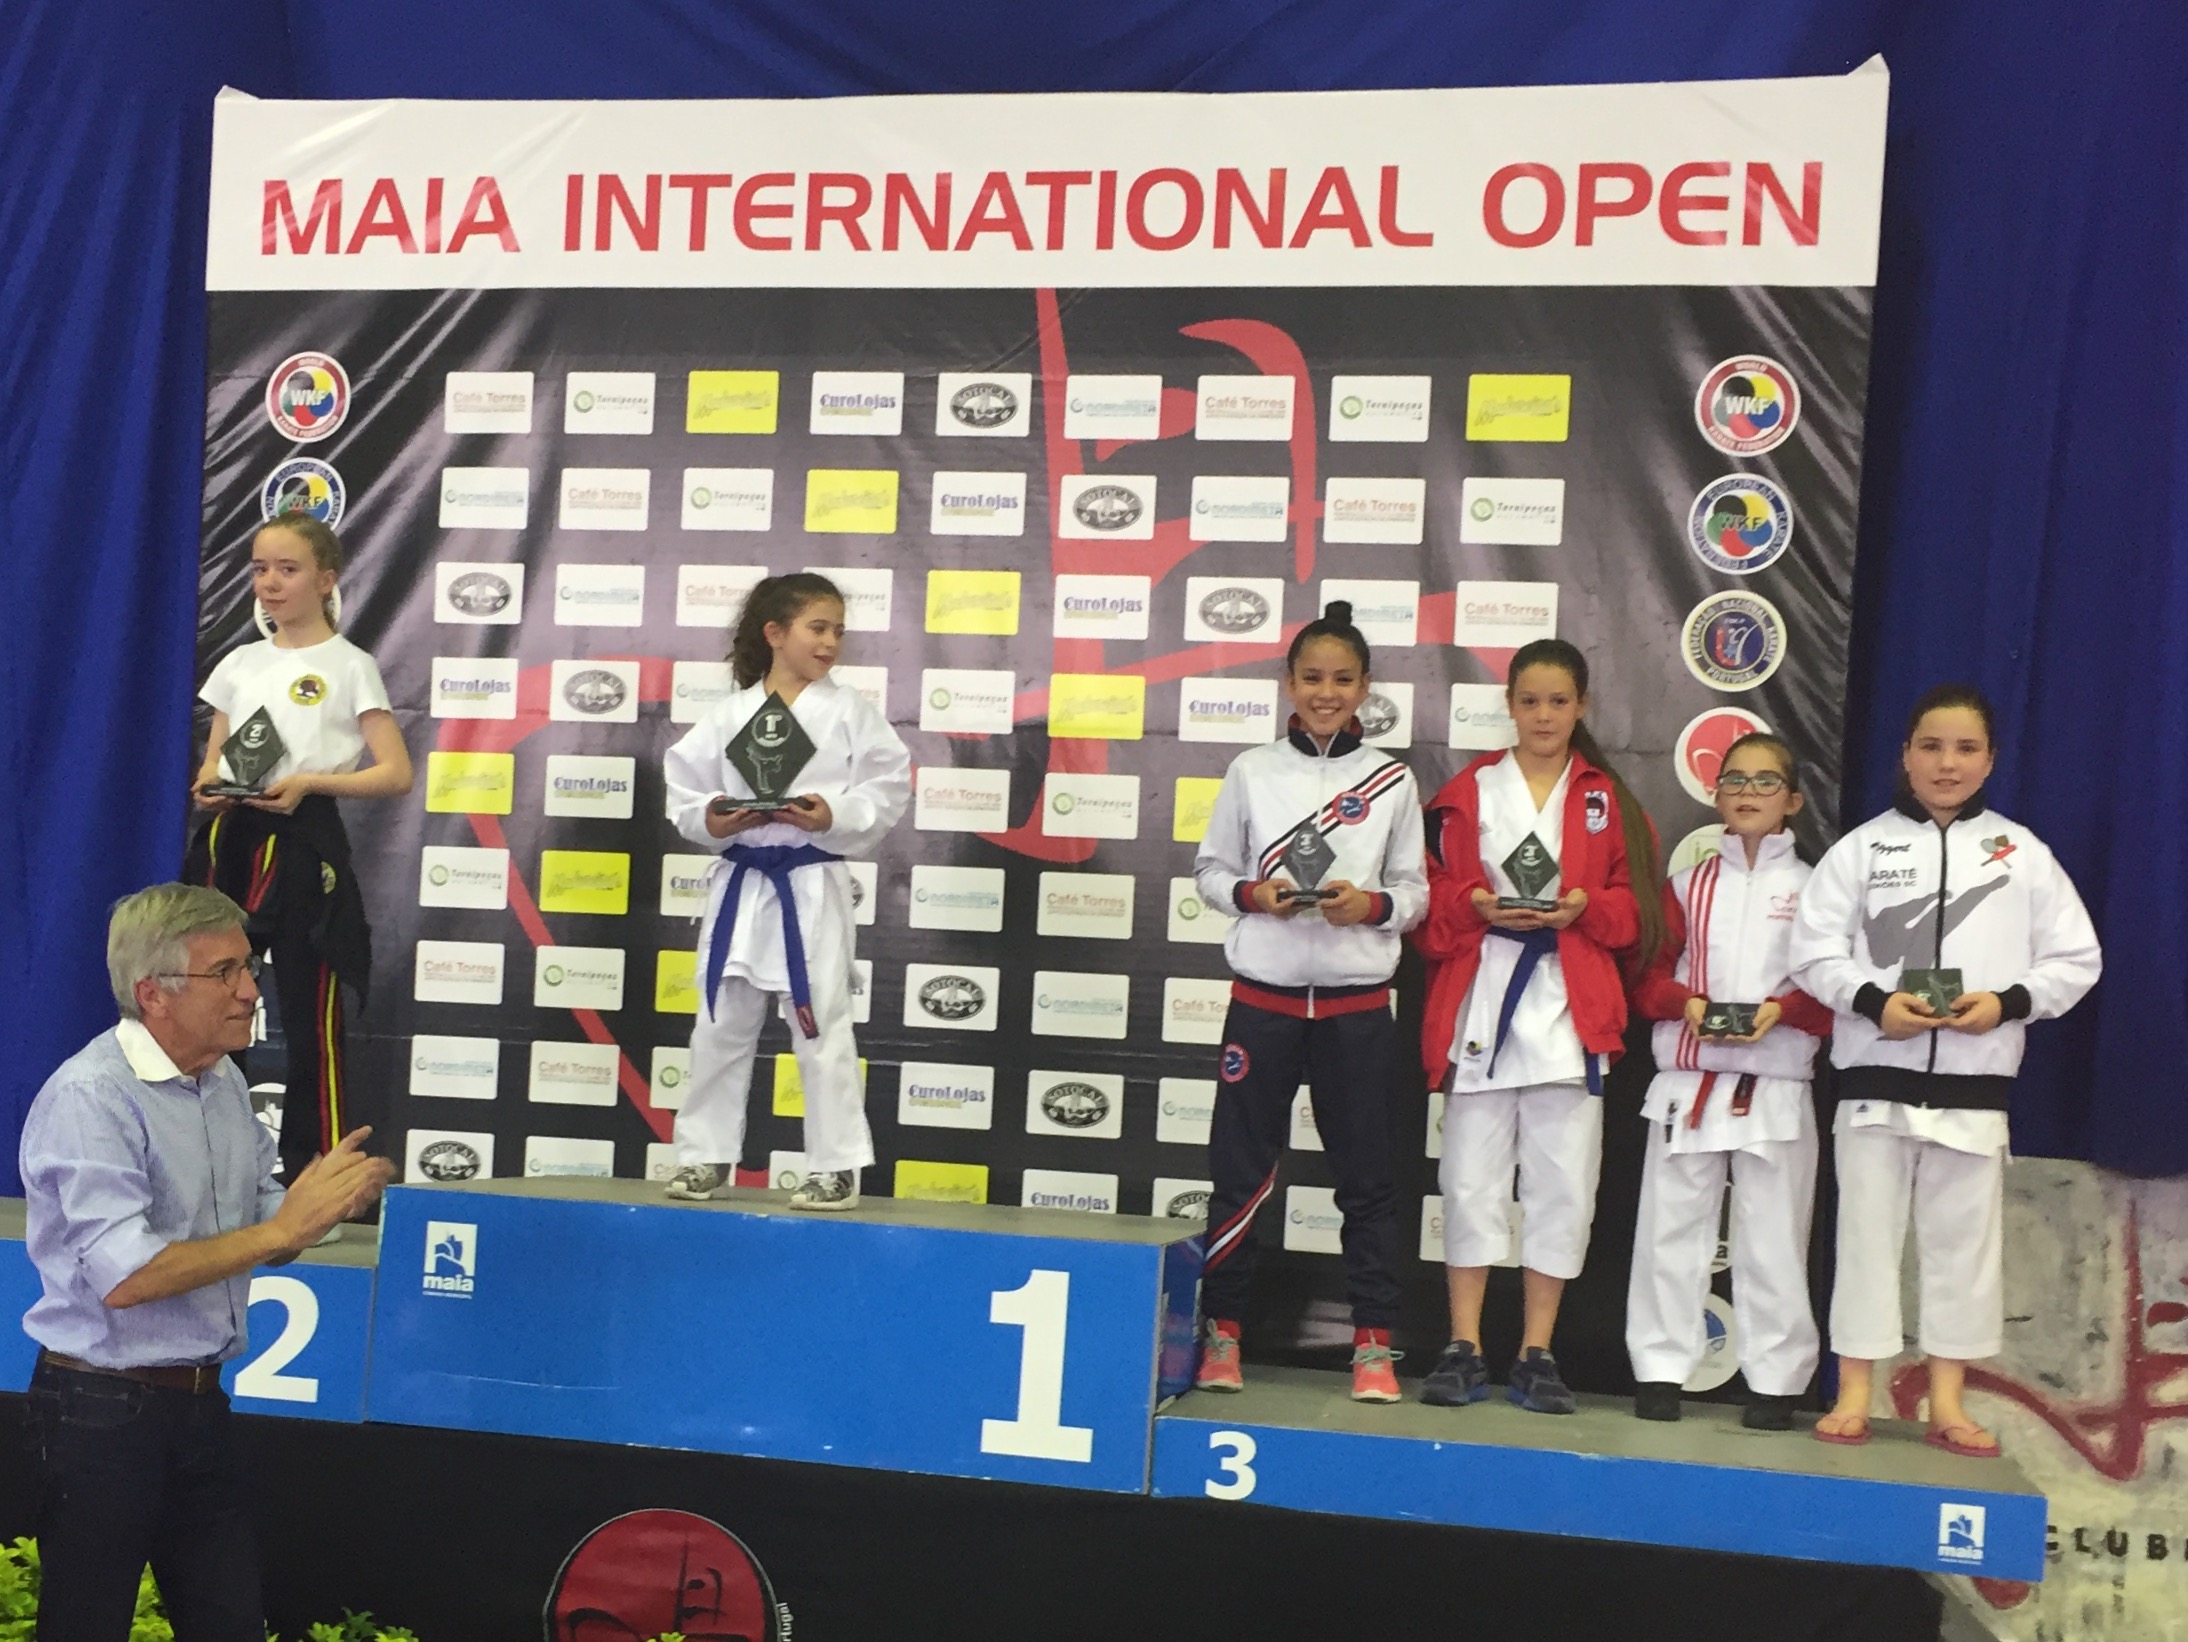 17º Internacional Portugal Maia Open - Karate 2017